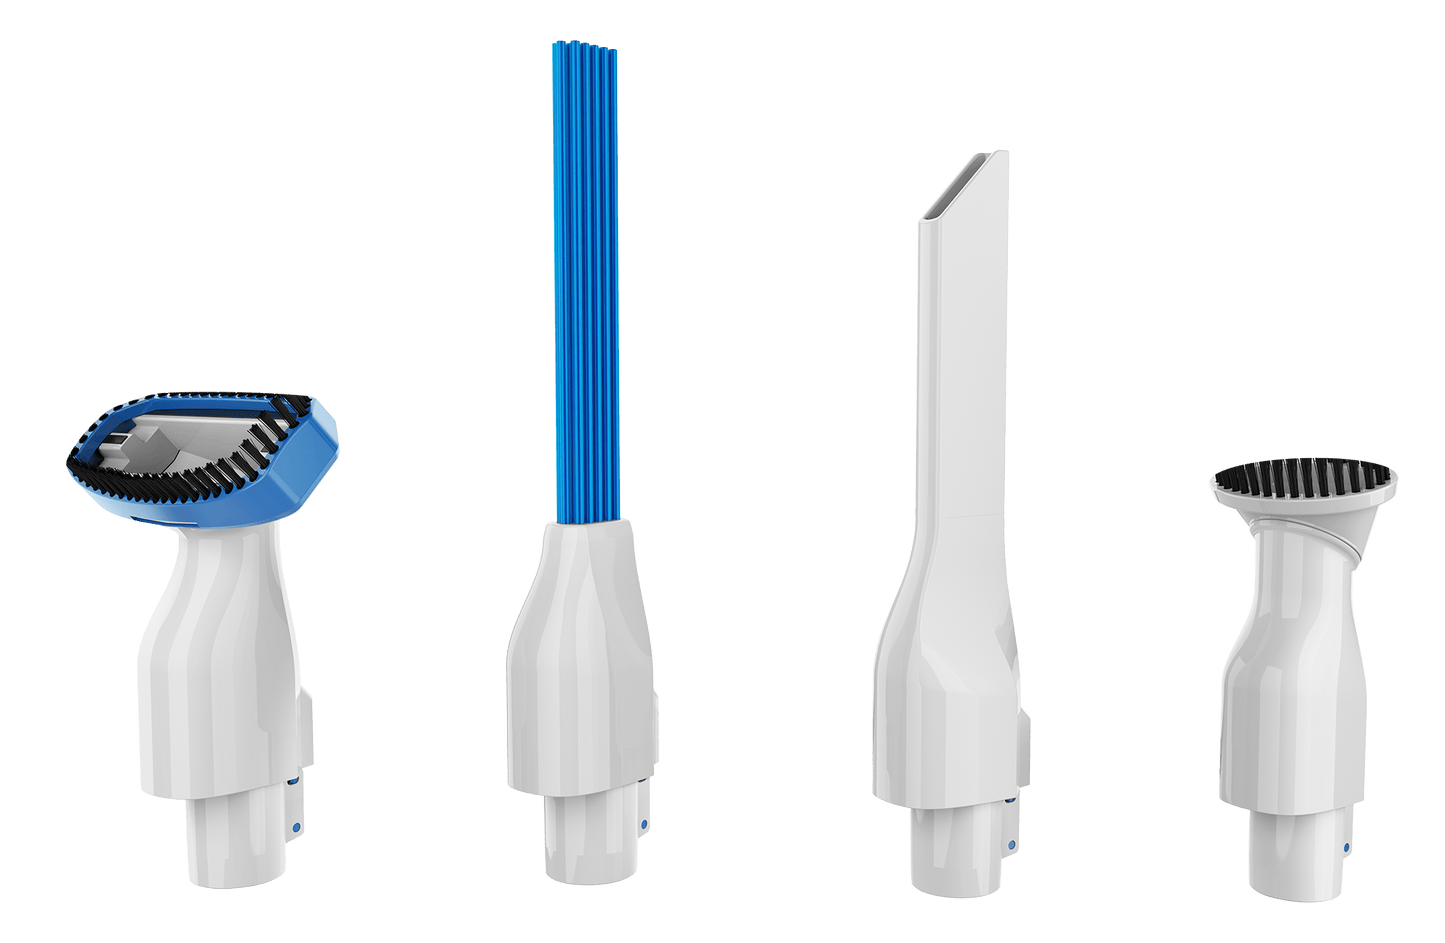 20V Cordless Stick Vacuum Kit w/ Brushless Motor Technology